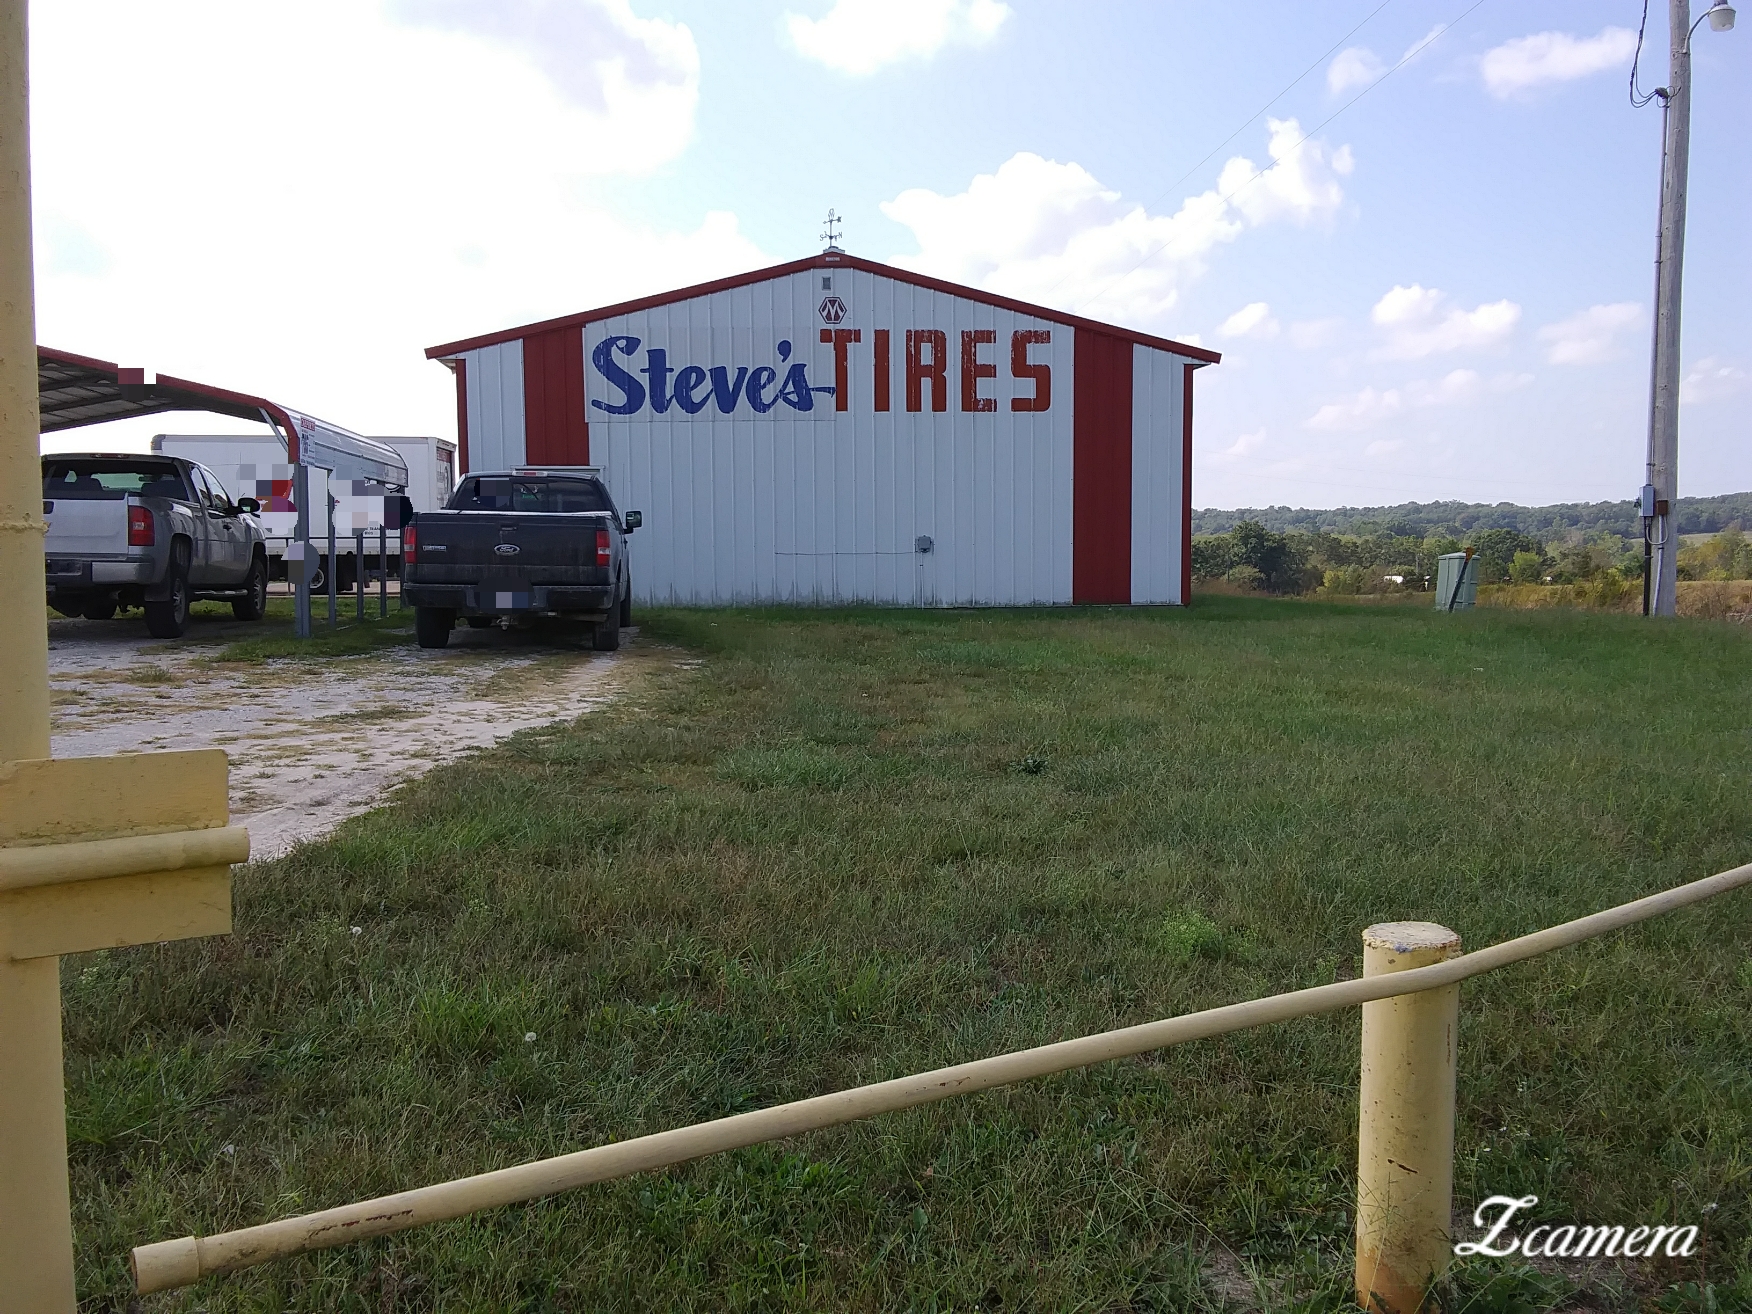 Steve's Tire Service